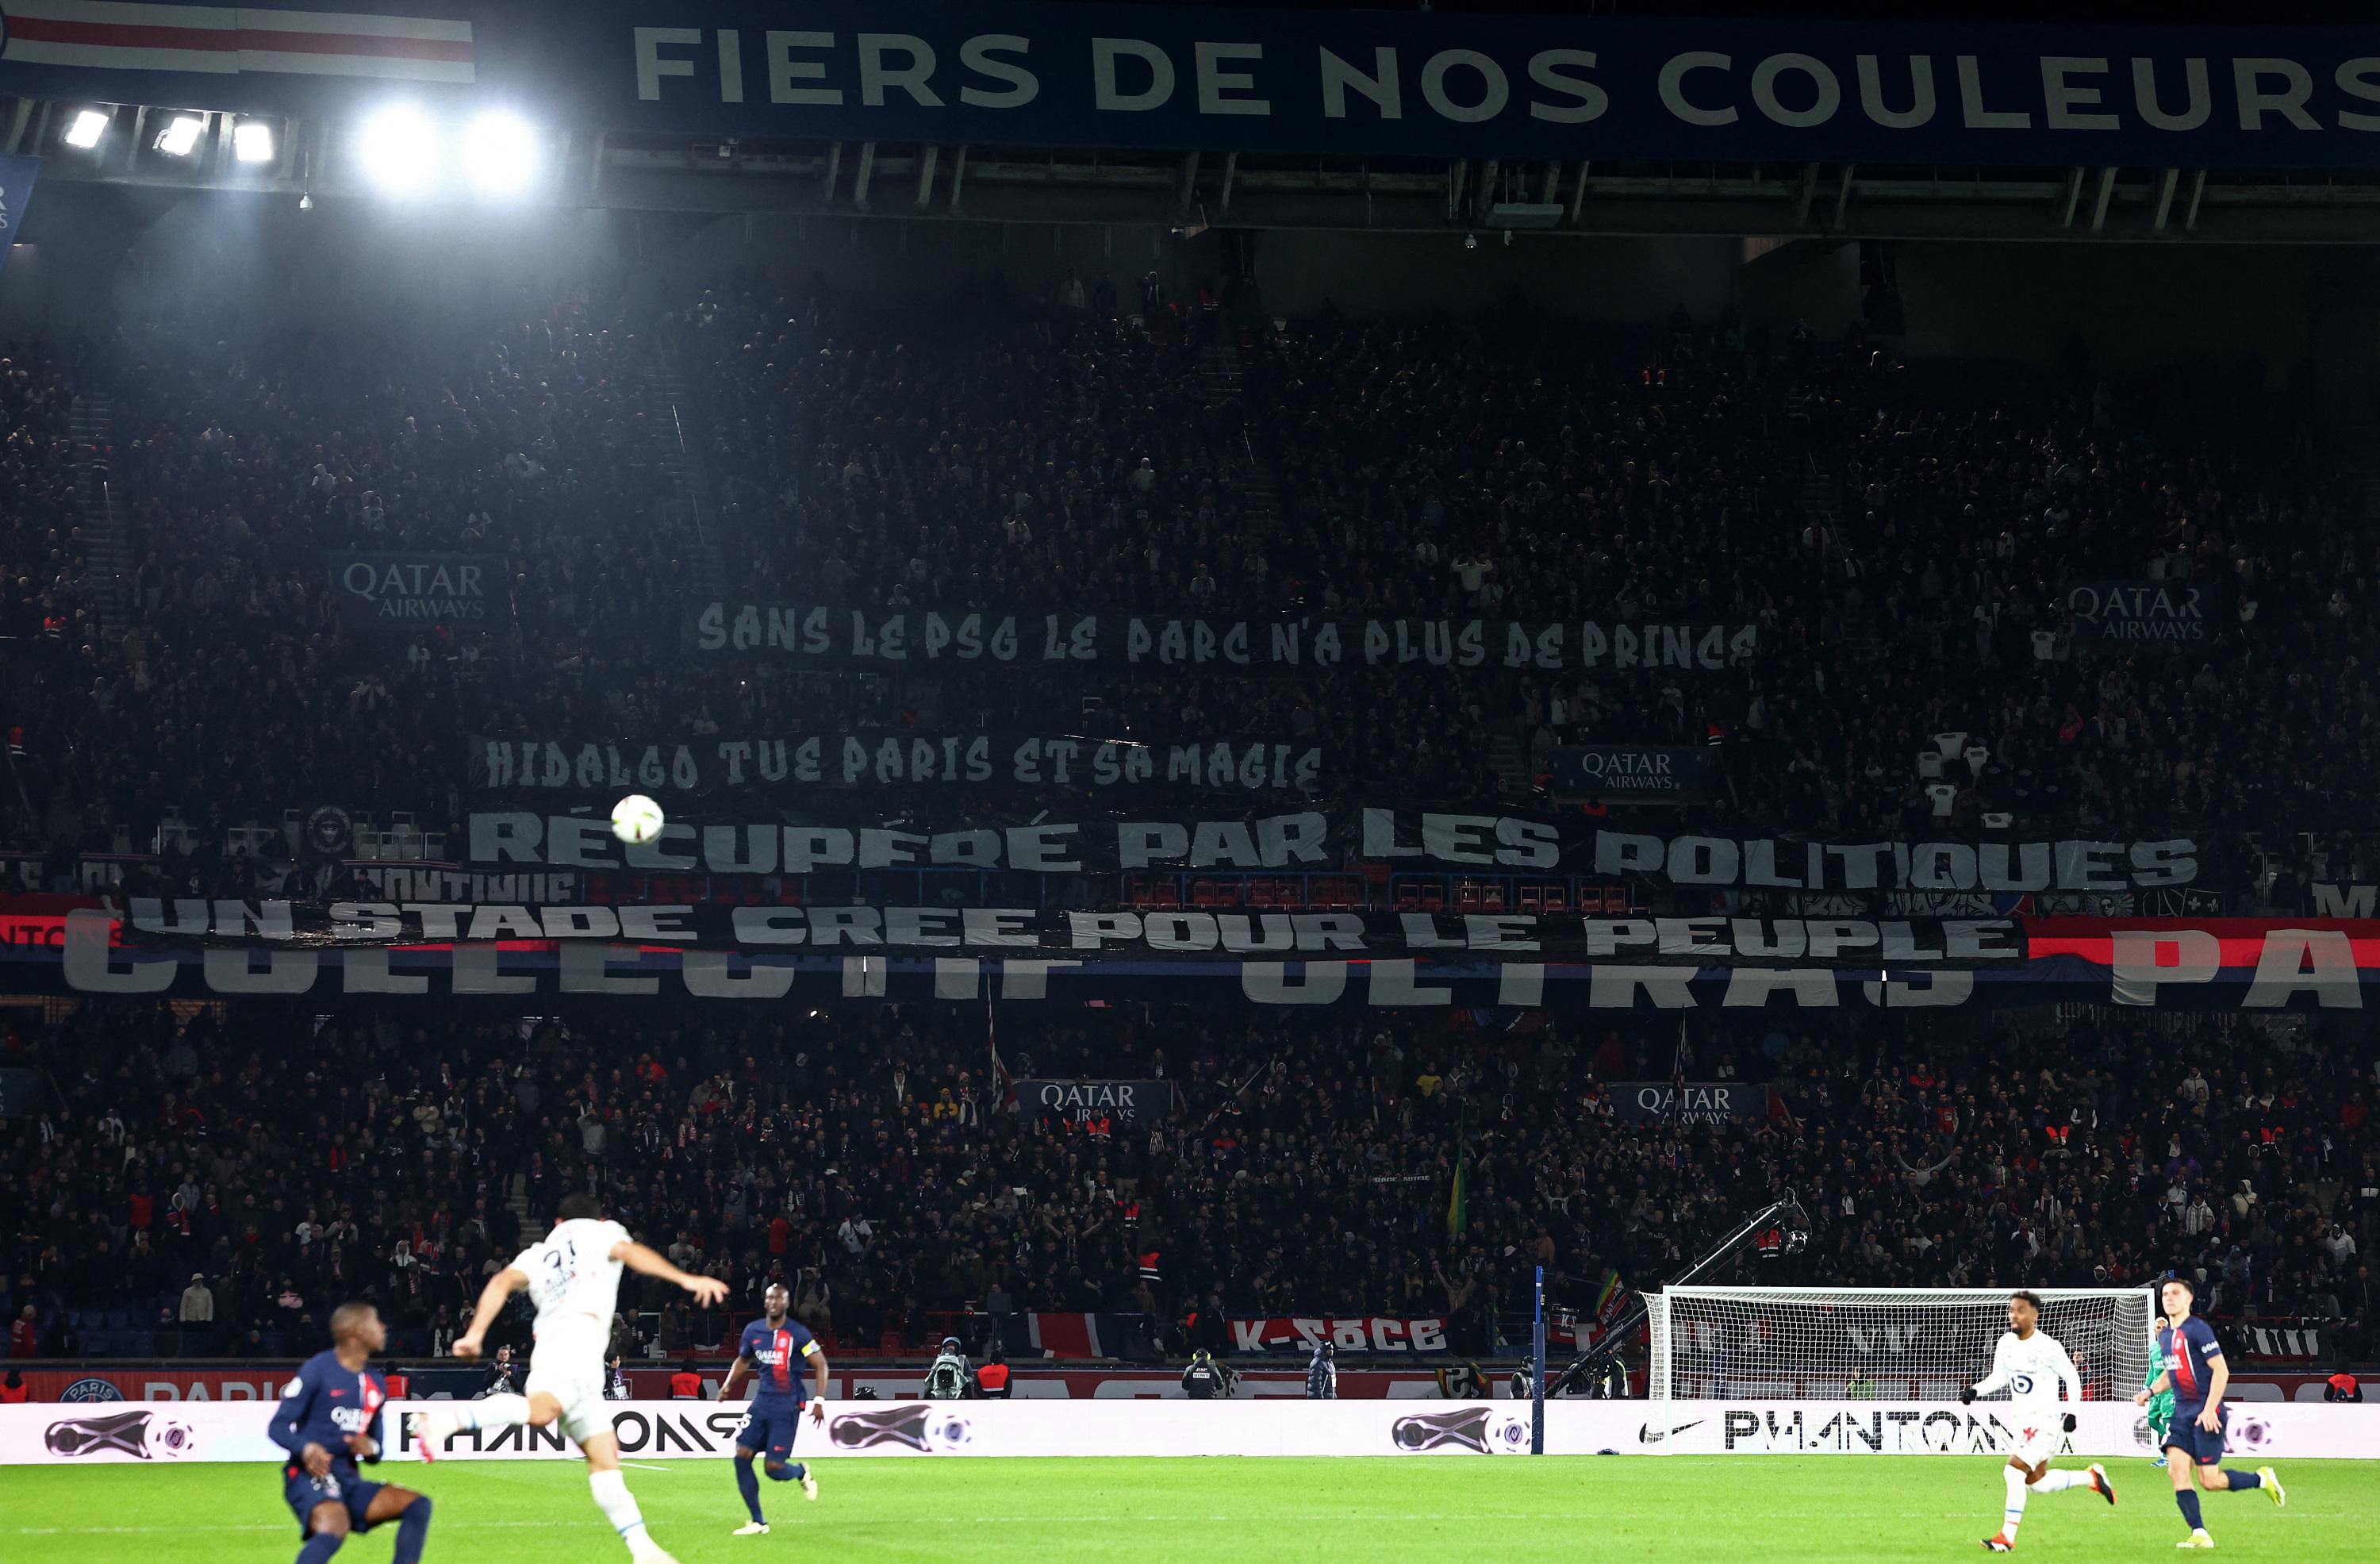 Ligue 1: “hostile chants towards Paris town hall” reports the PSG-Lille delegate